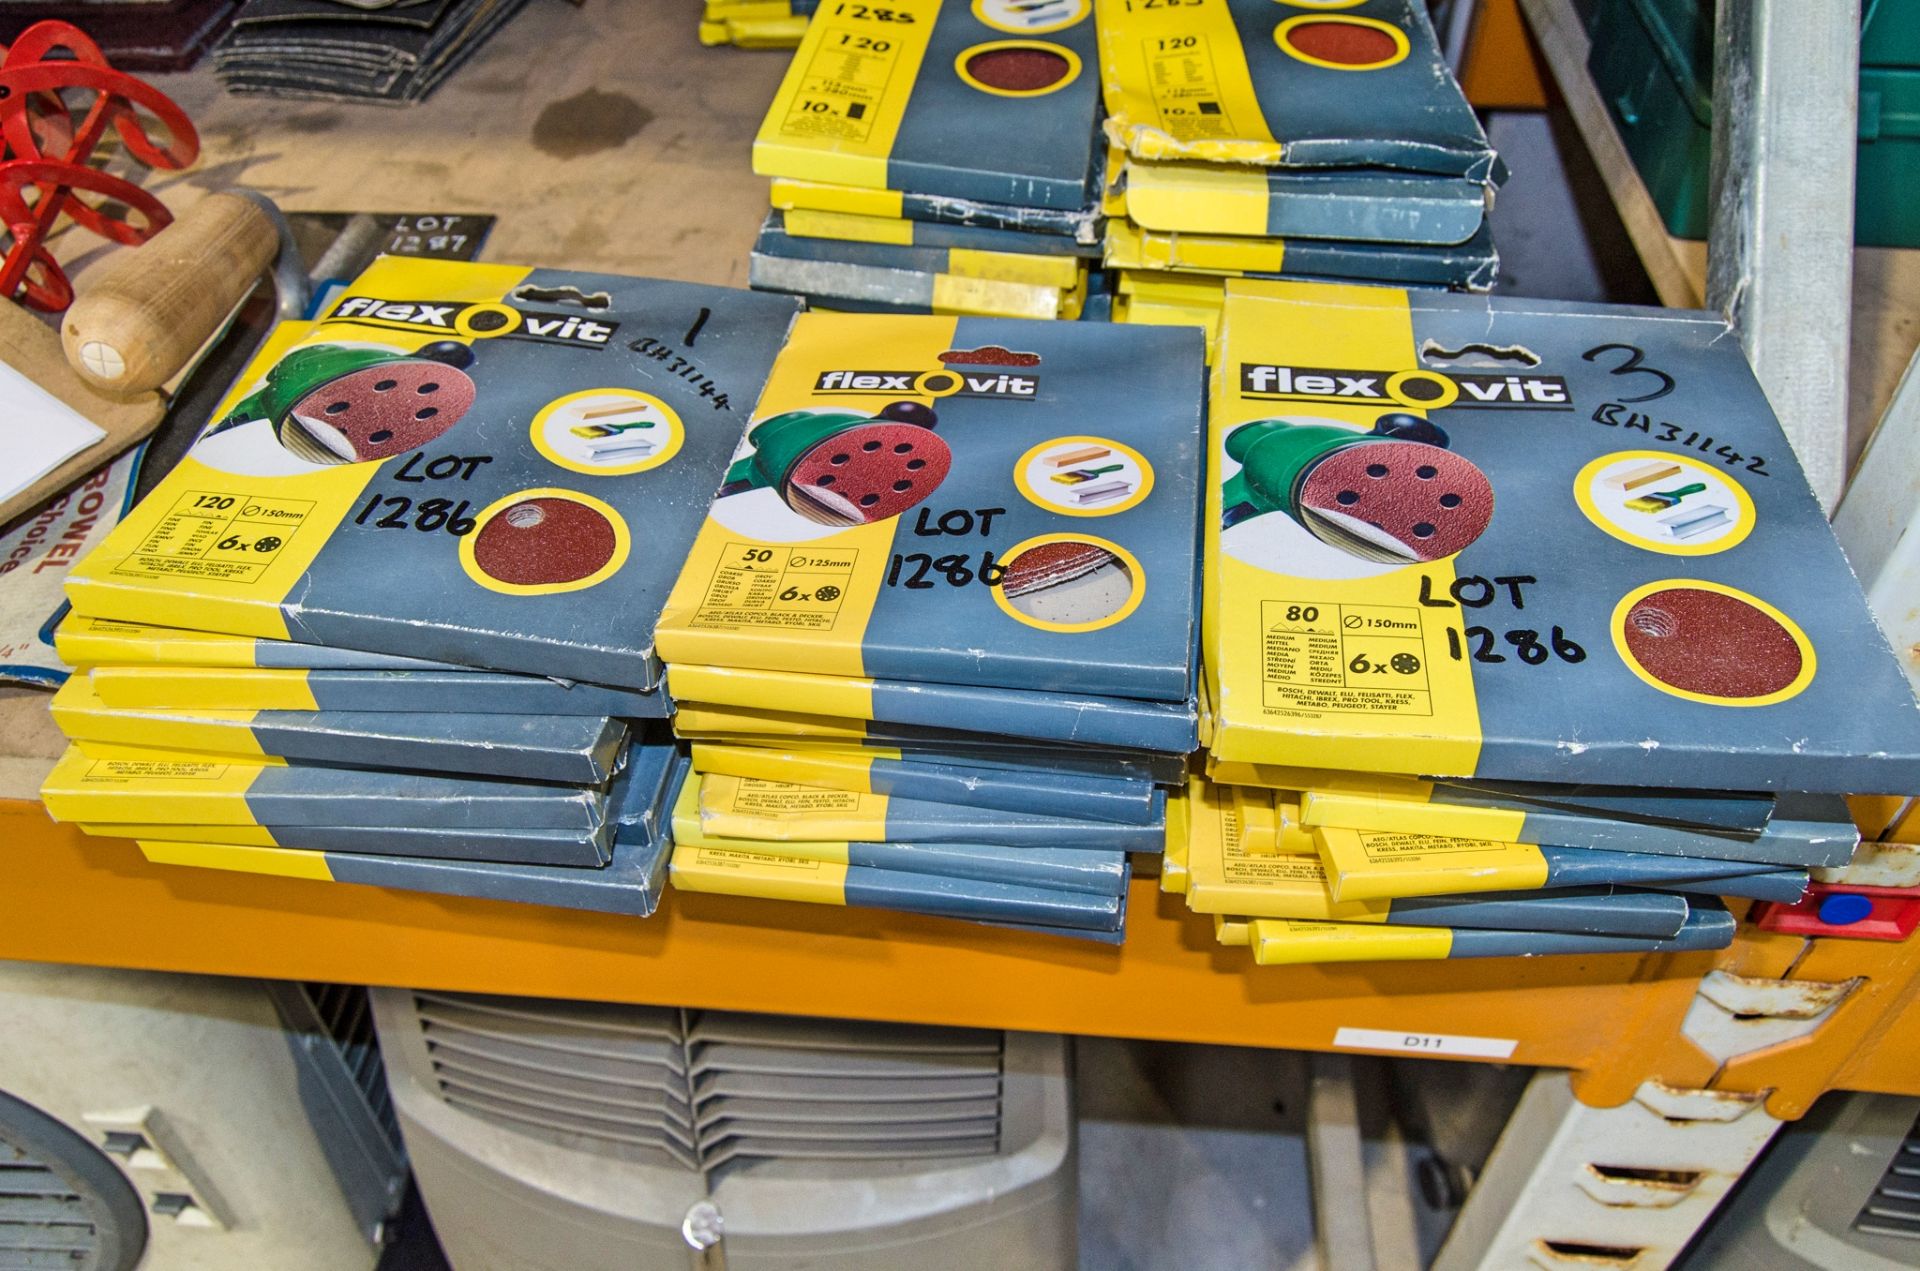 30 - Boxes of Flexovit sanding discs (6 per box)